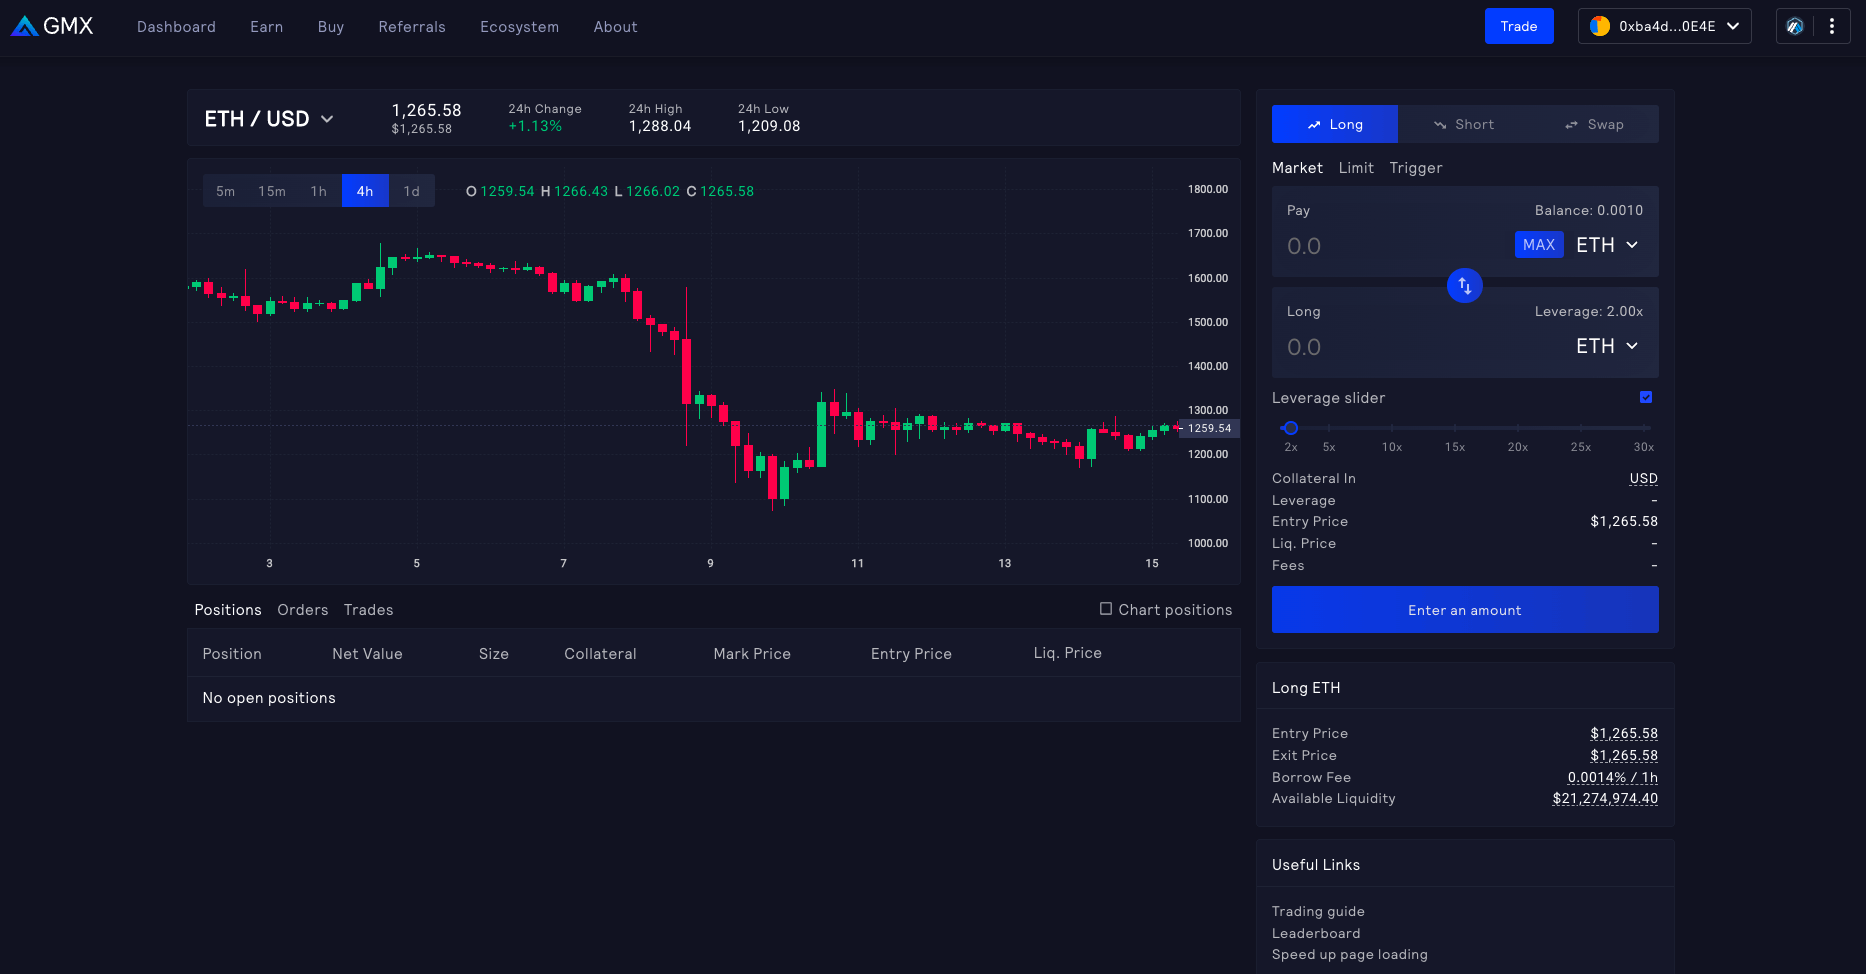 A screenshot of the GMX trading platform